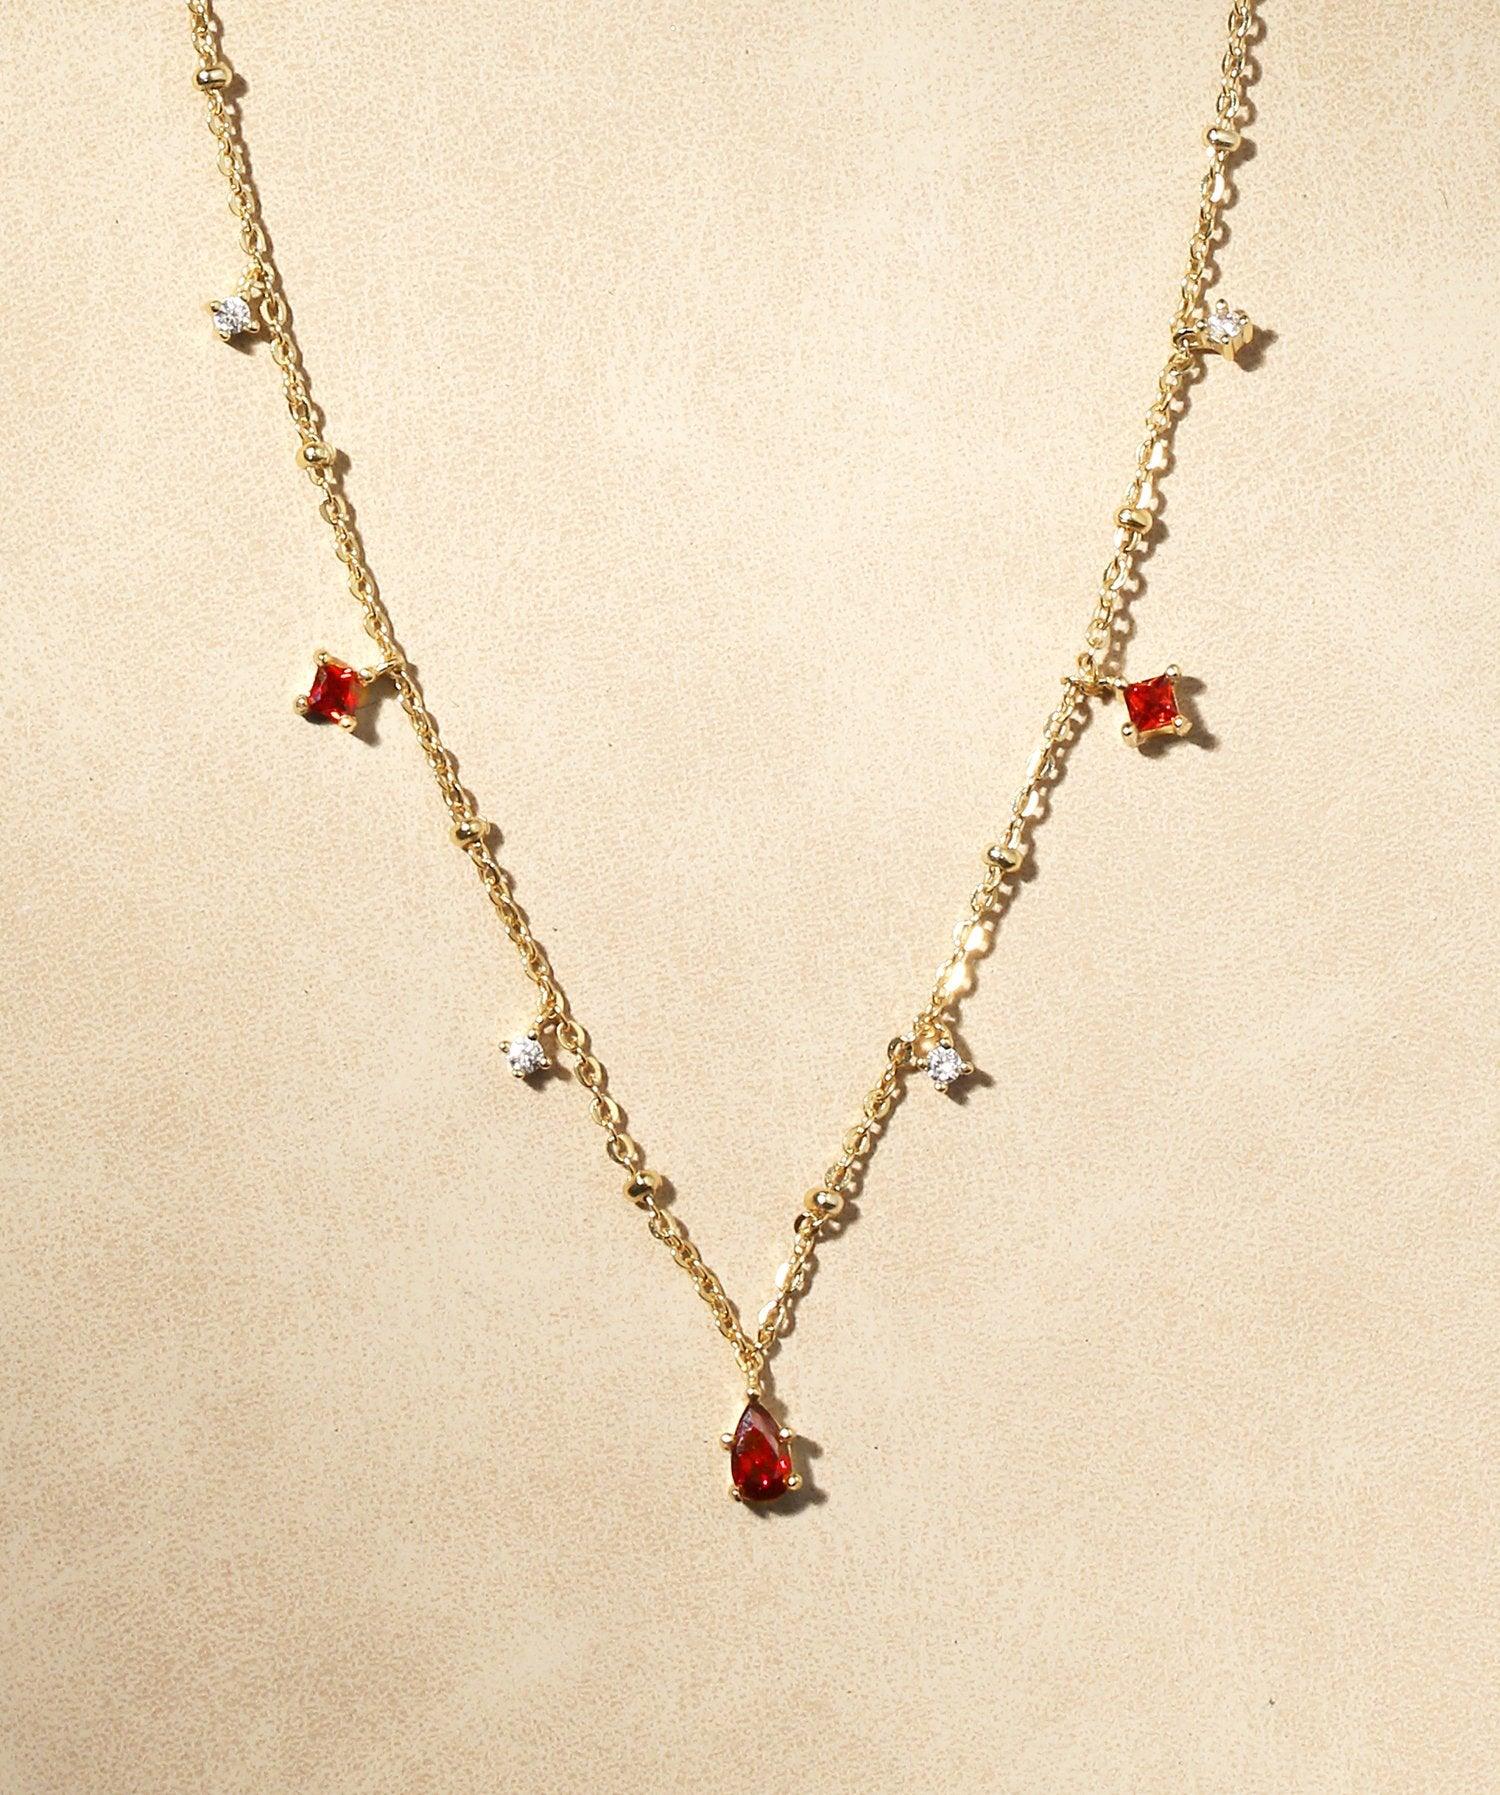 Elysee Necklace in Garnet Red - En Route Jewelry